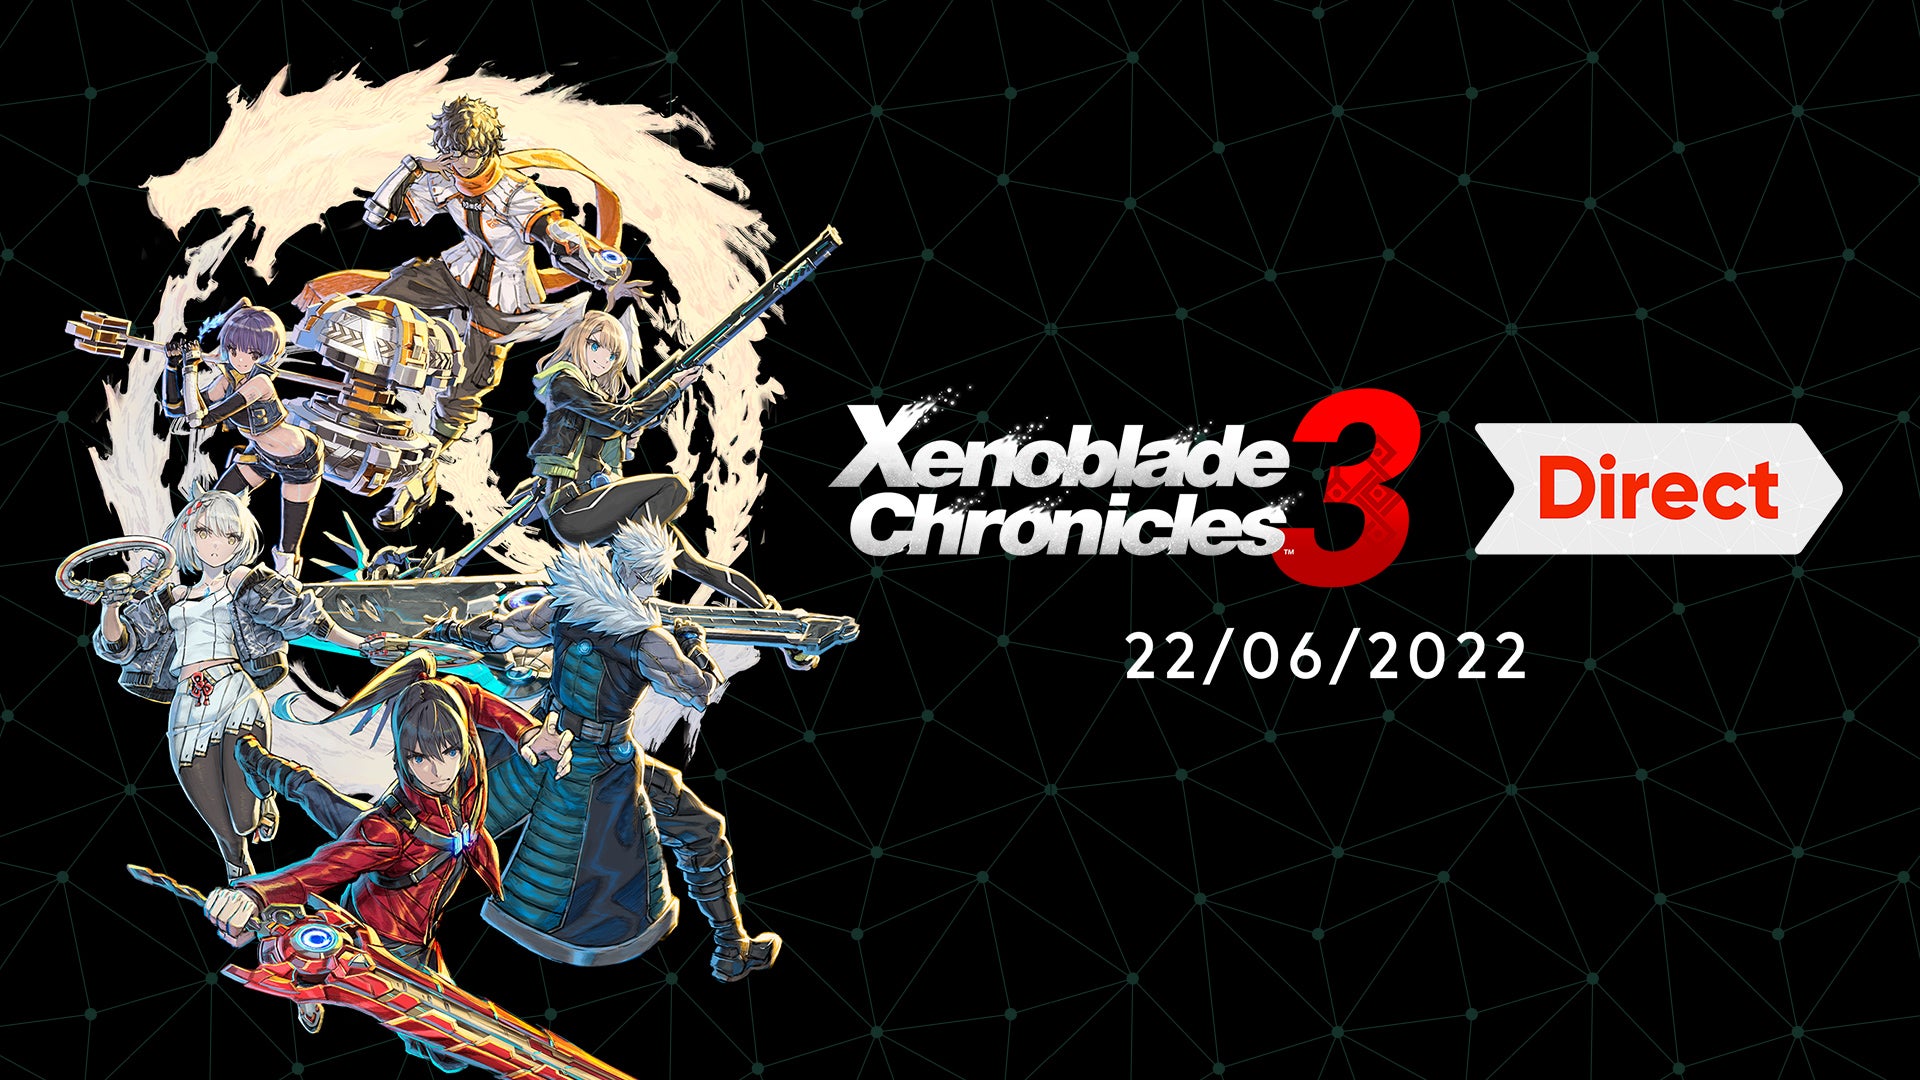 Imagem para Xenoblade Chronicles 3 Direct anunciada